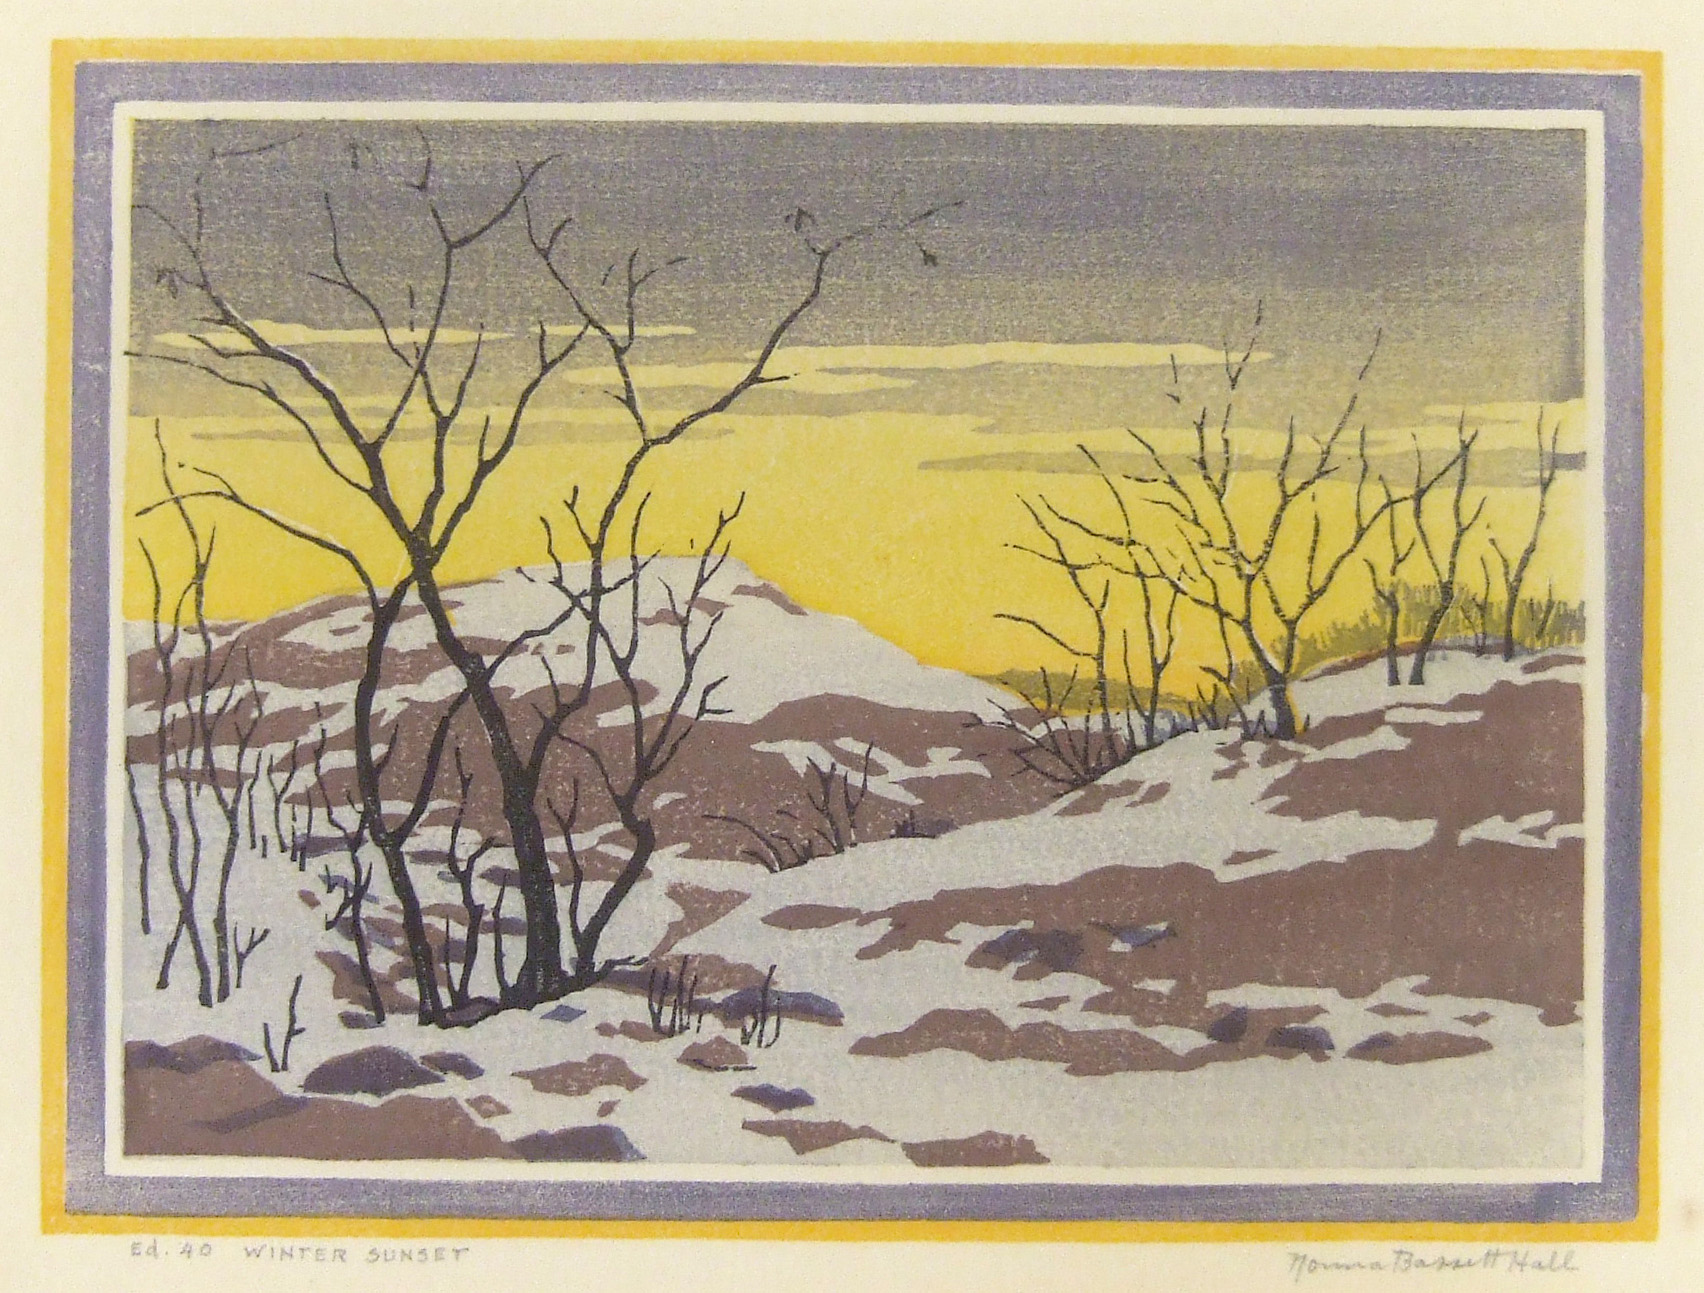 Norma Bassett Hall, “Winter Sunset”, color block print